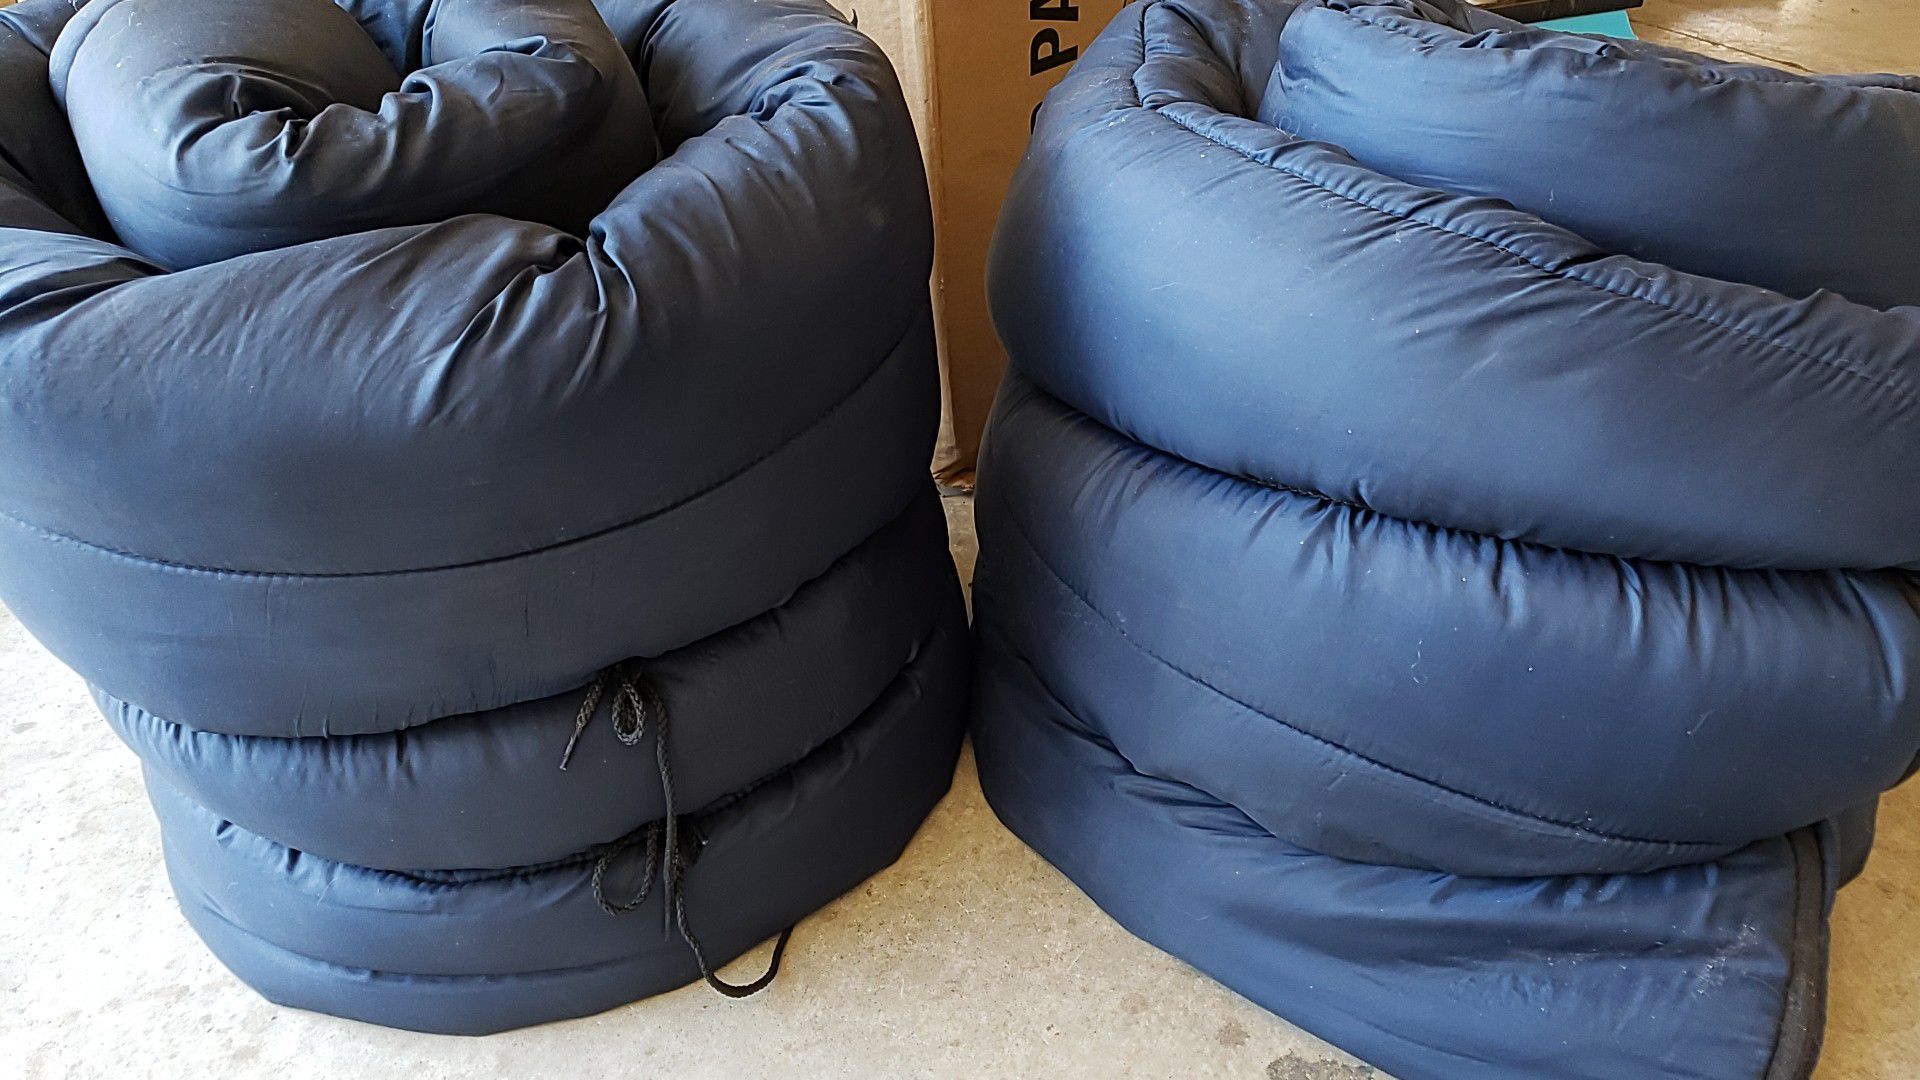 2 navy blue Coleman sleeping bags